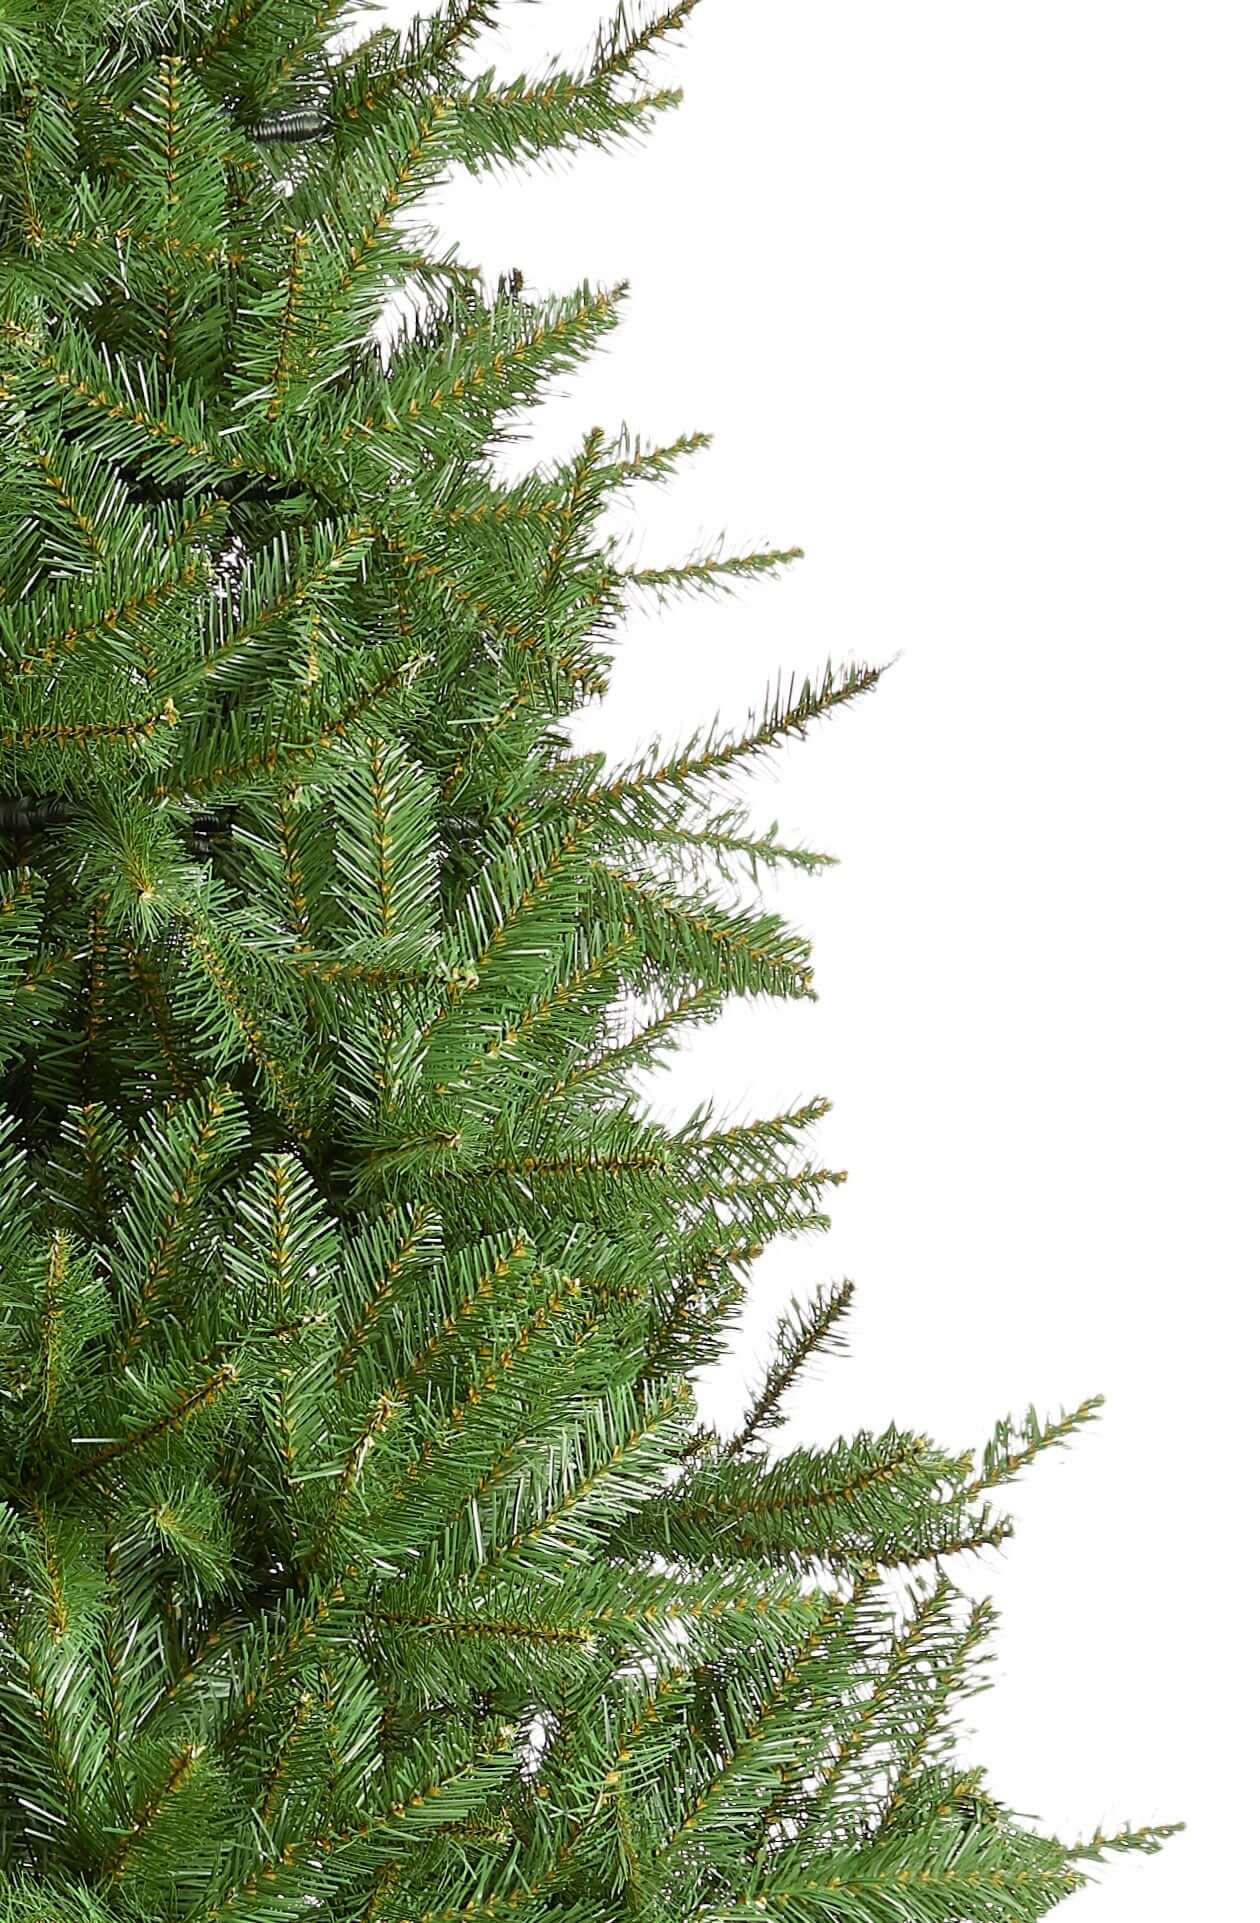 King of Christmas 7.5' Yorkshire Fir Artificial Christmas Tree Unlit